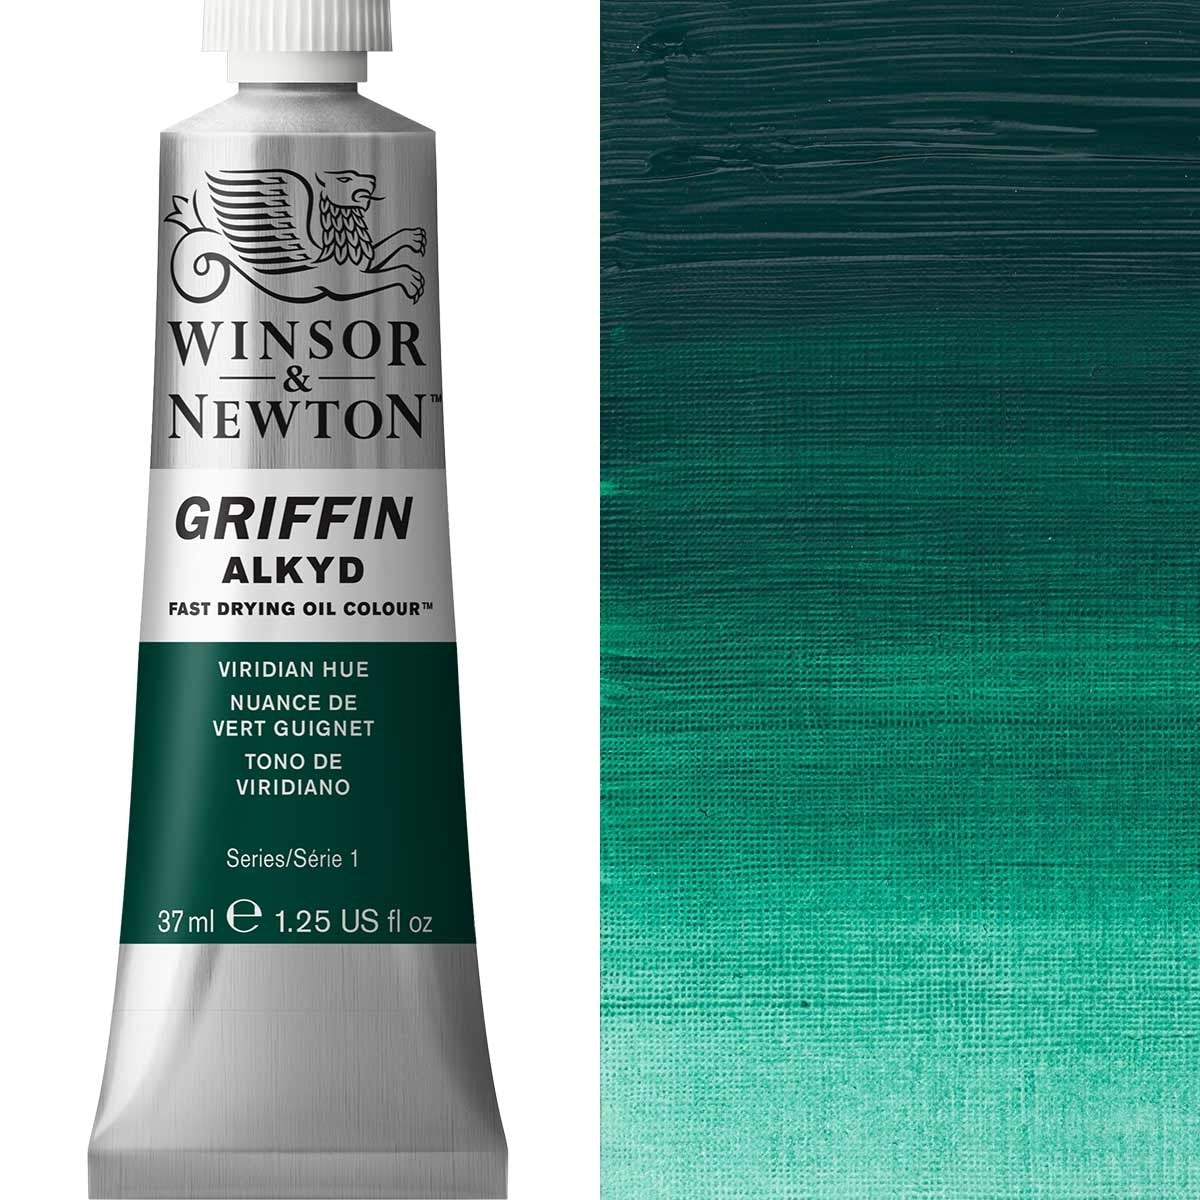 Winsor and Newton - Griffin ALKYD Oil Colour - 37ml - Viridian Hue